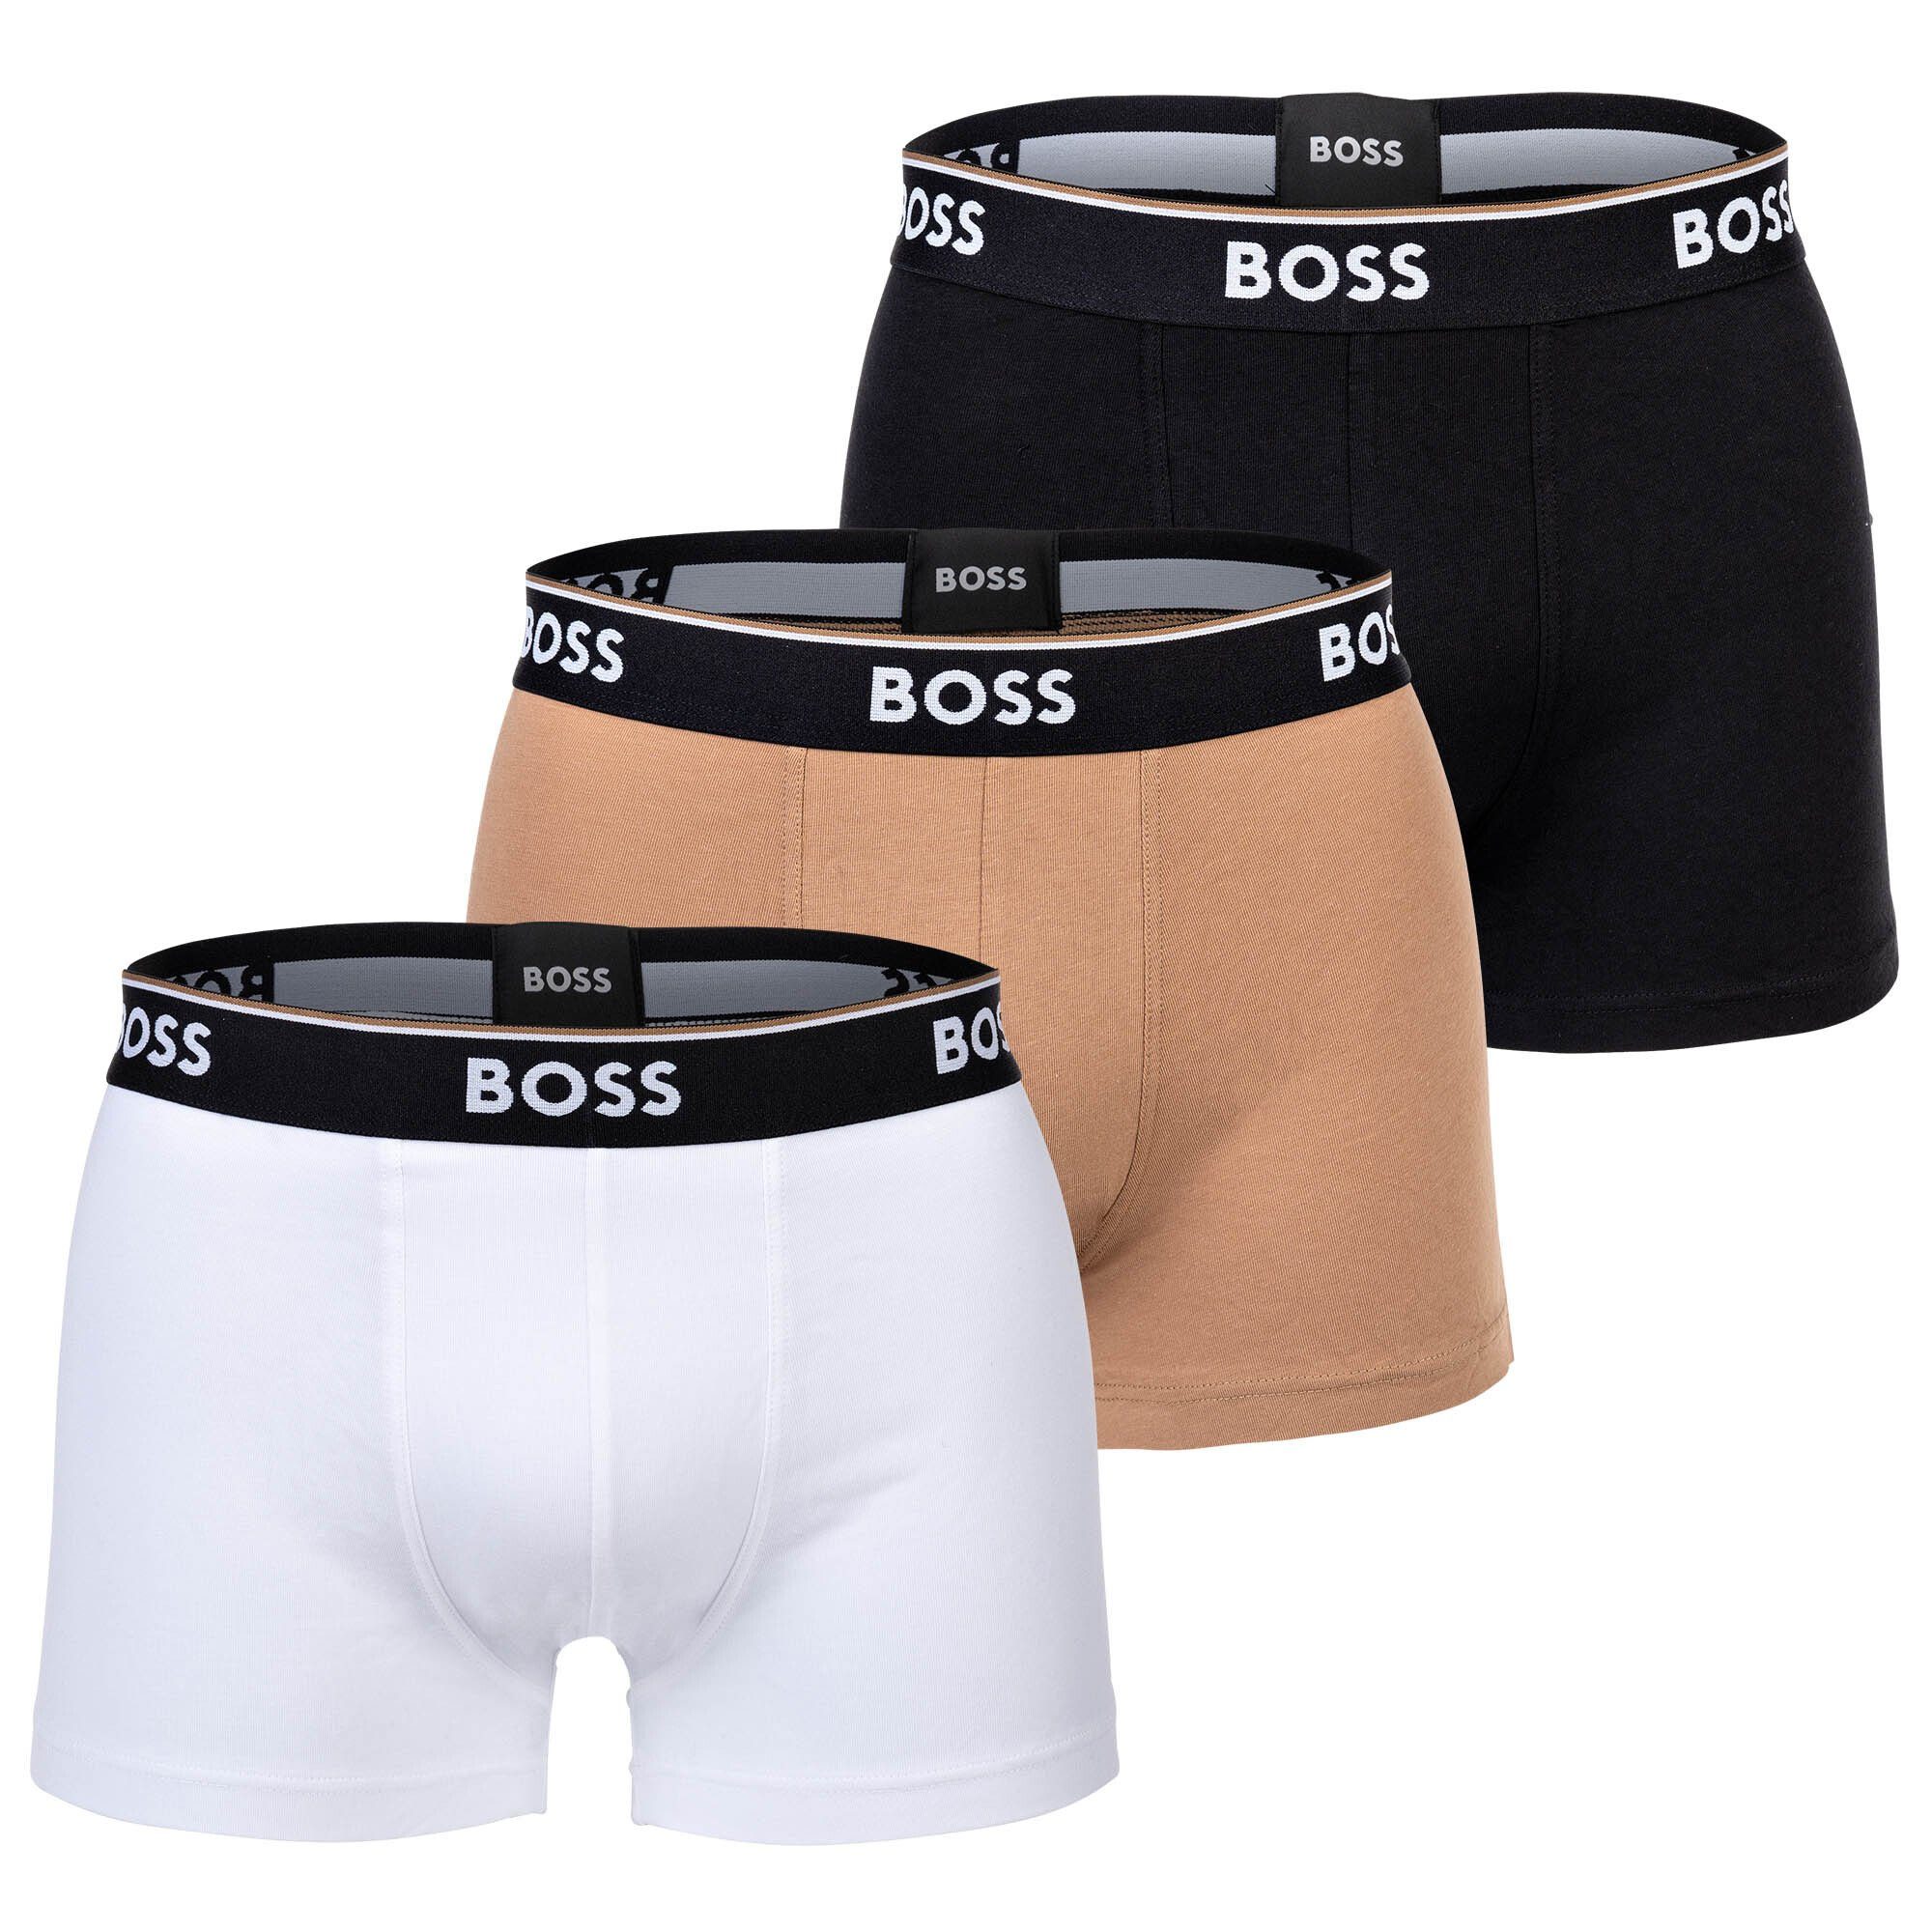 BOSS Boxer Herren Trunks, 3er Pack - 3P Power, Boxershorts Schwarz/Braun/Weiß